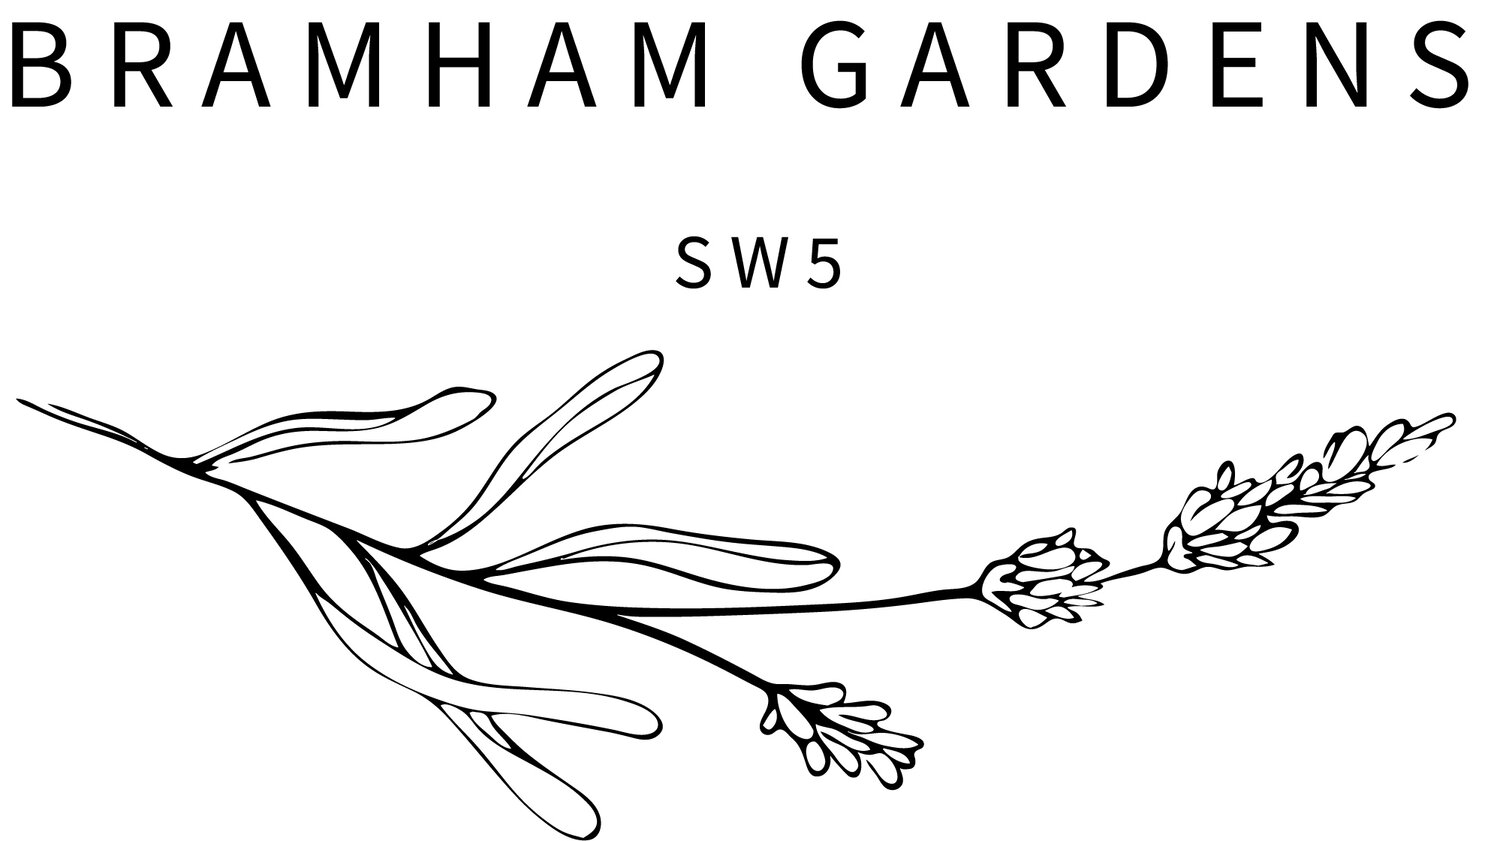 Bramham Gardens SW5